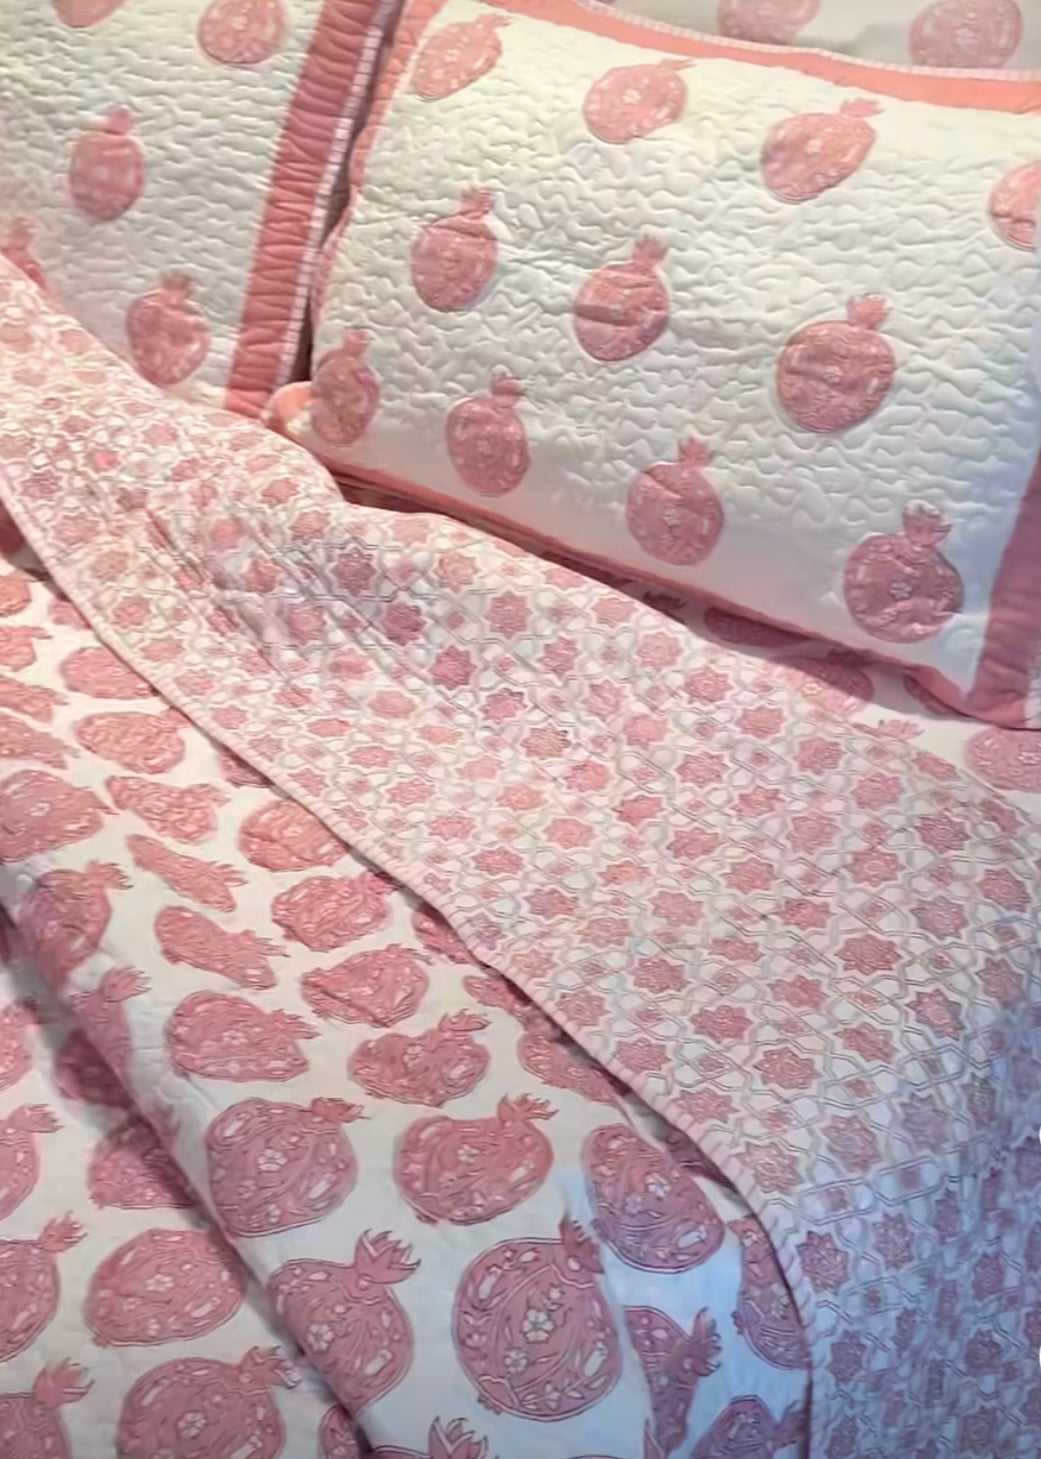 Ratan Berries Mulmul Voile Bedcover cum Comforter (Reversible) Size 90x108 inches